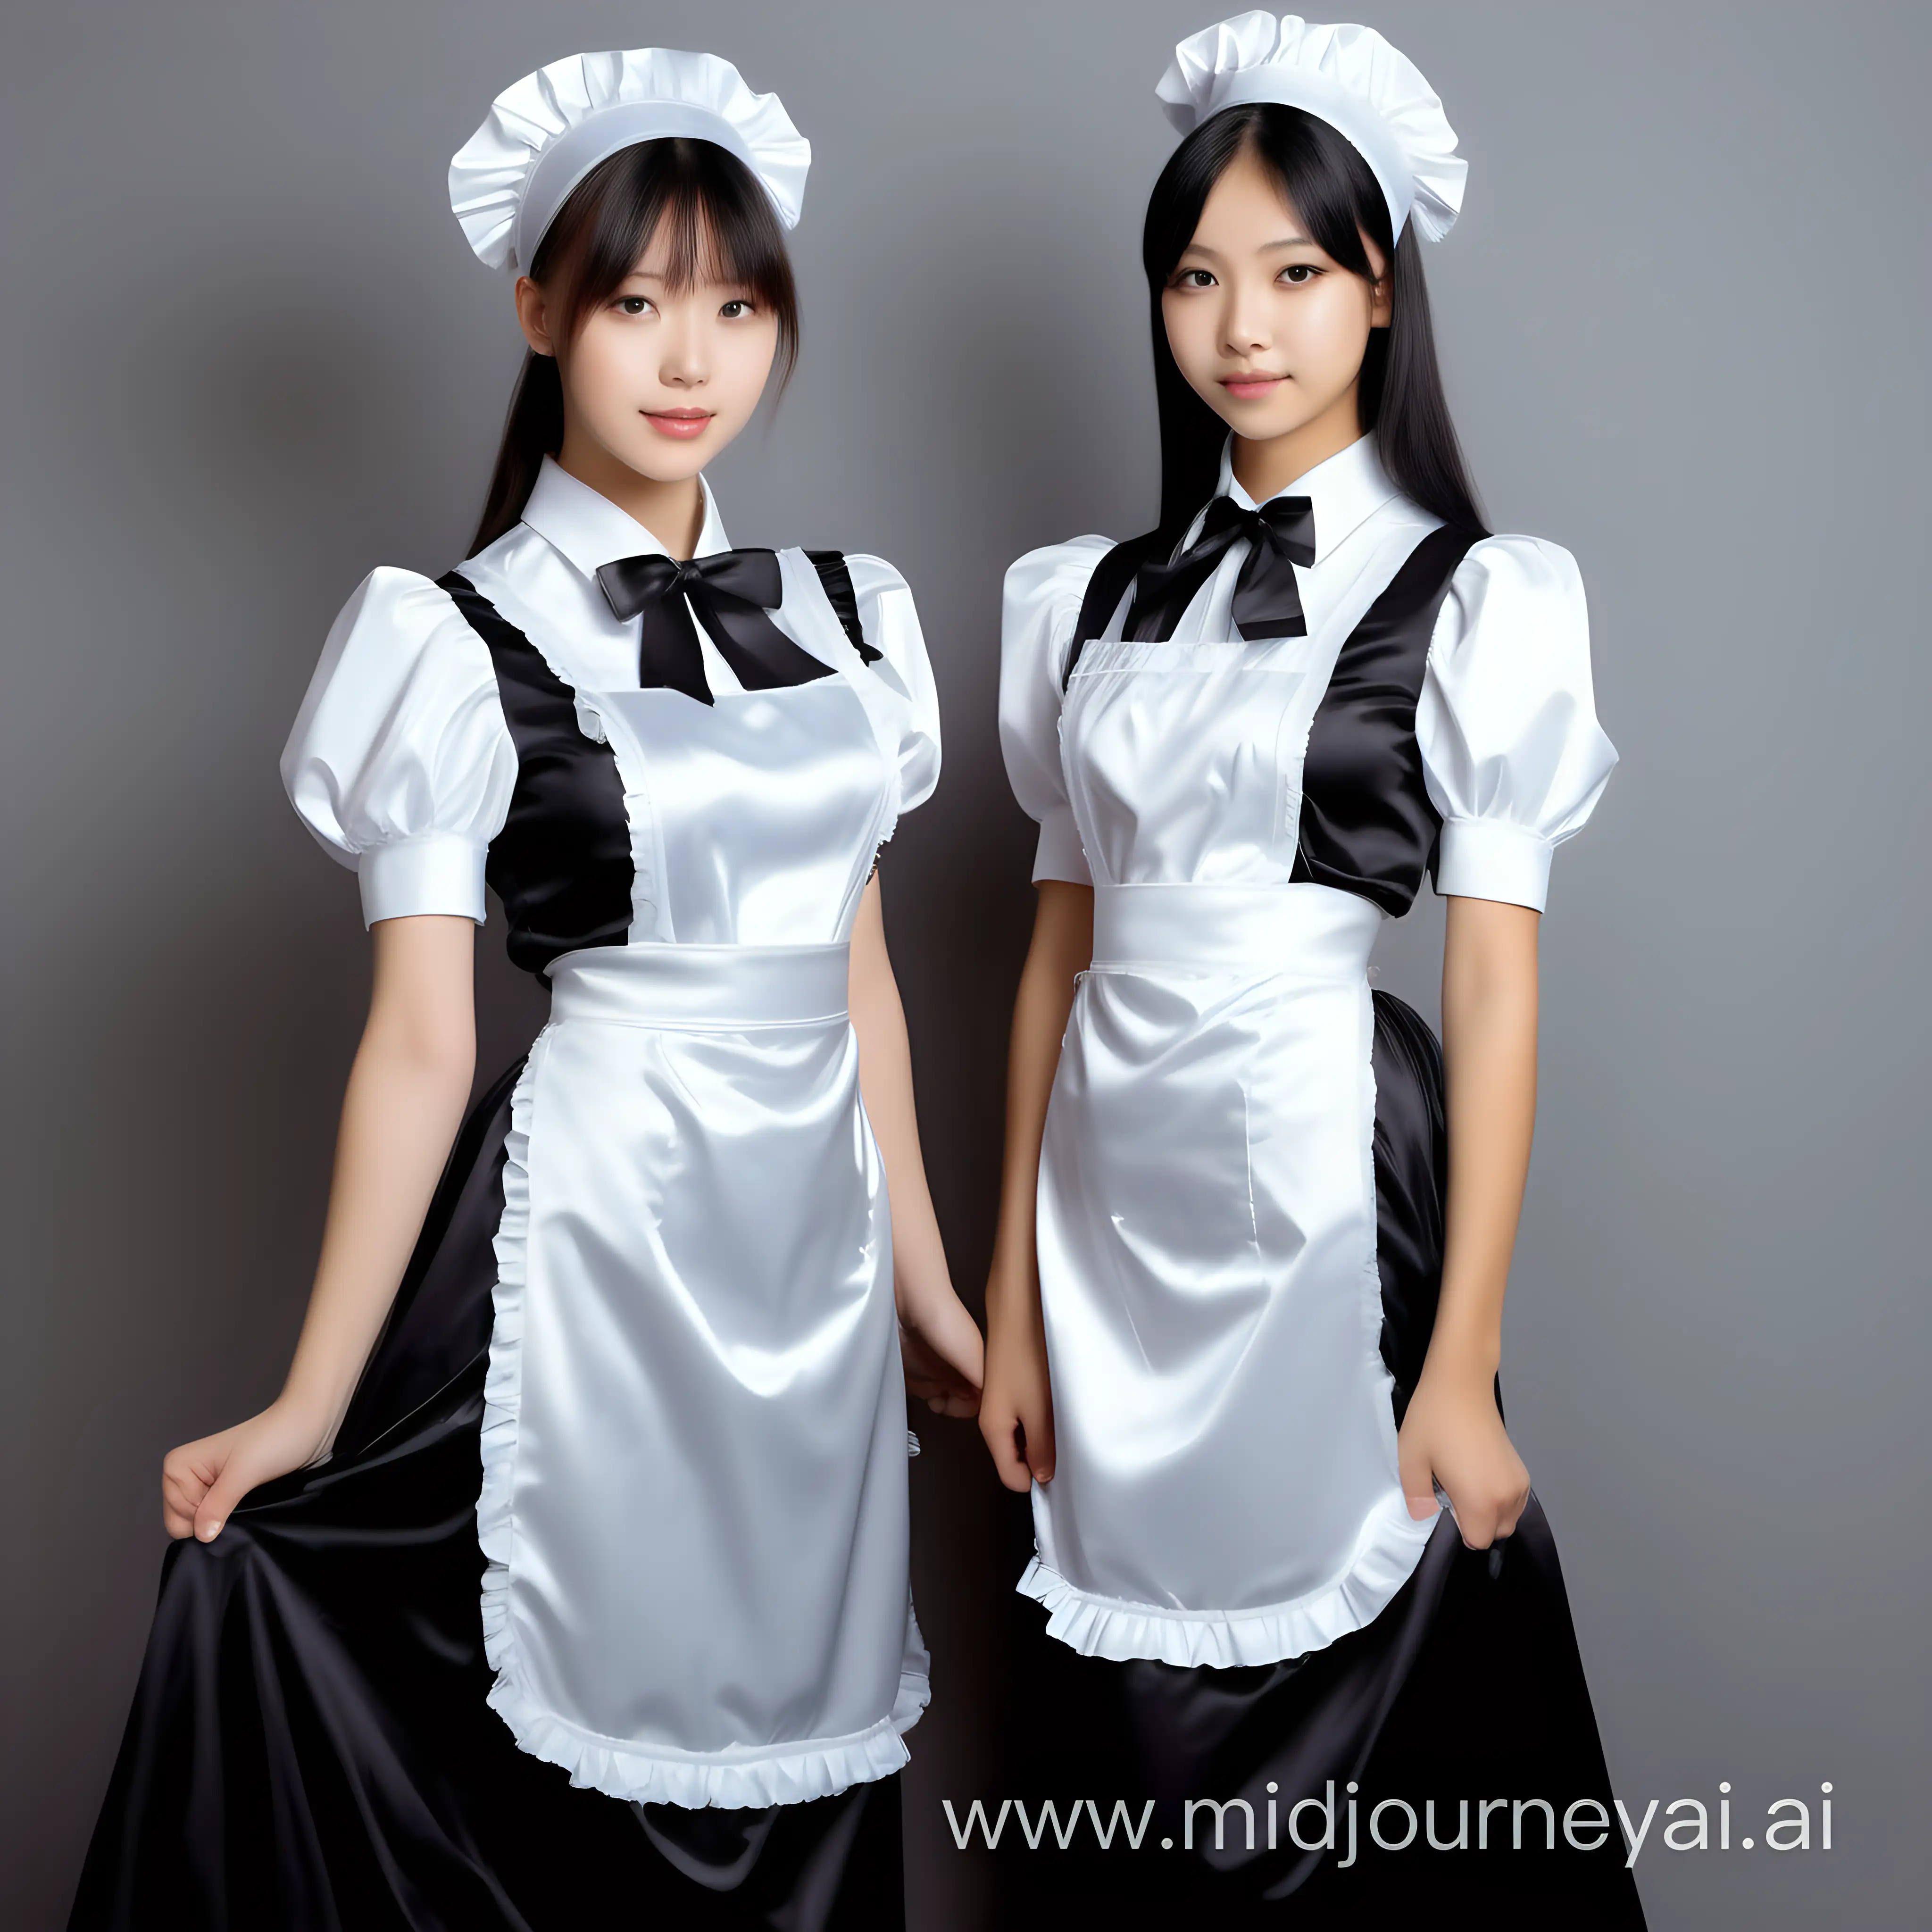 Elegant Girls in Satin Long Maid Uniforms Engaging in Enchanting Tasks